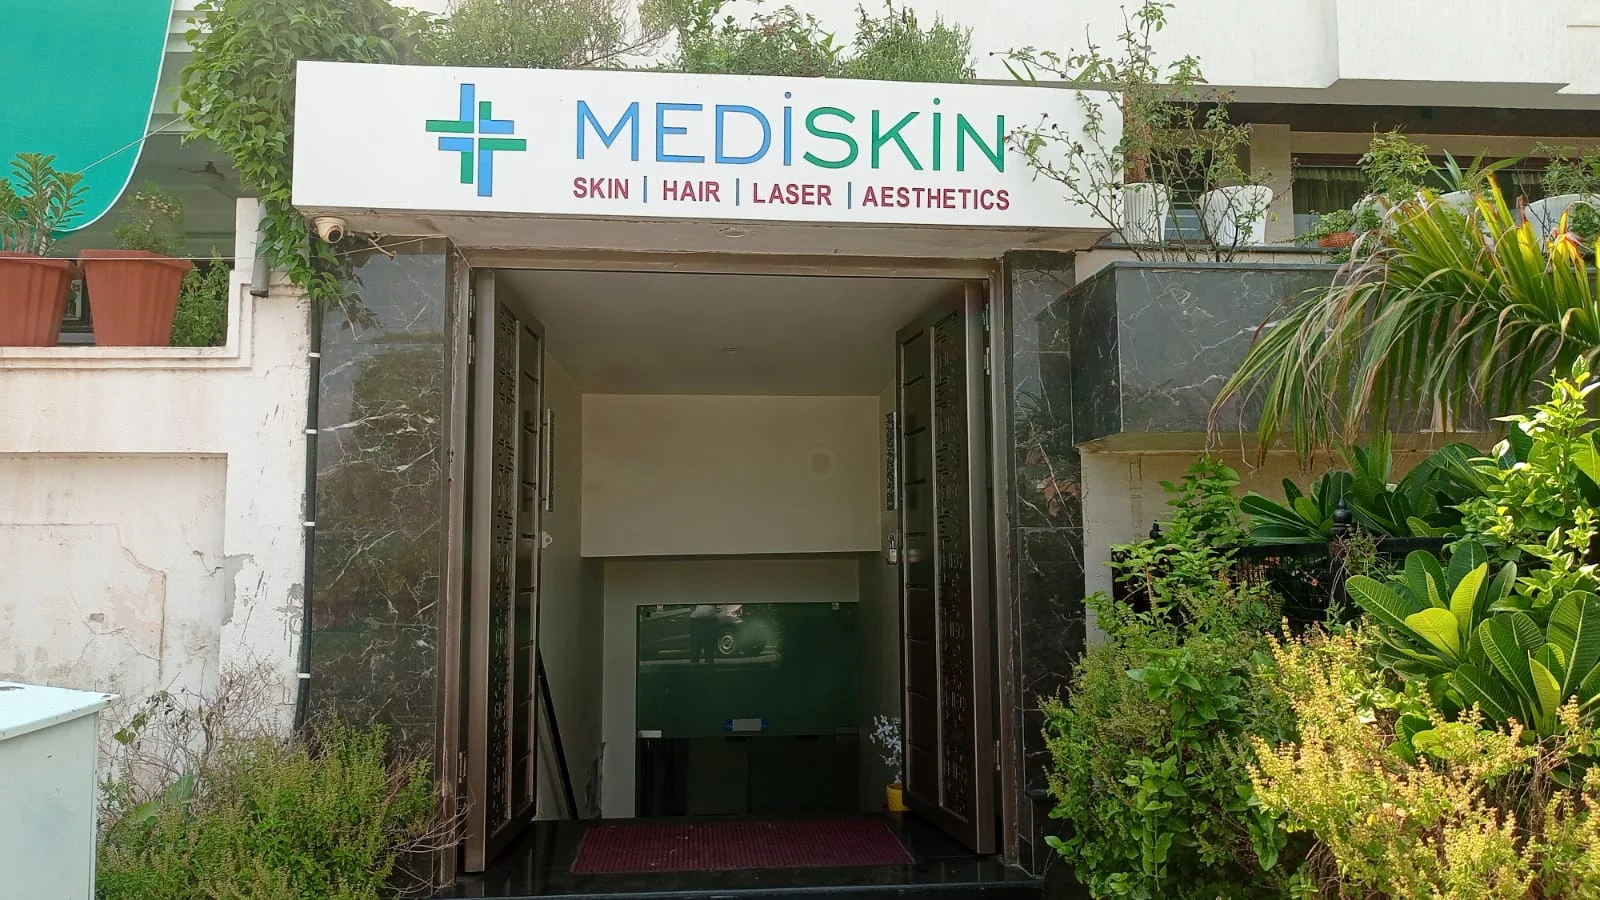 Mediskin clinic - front face